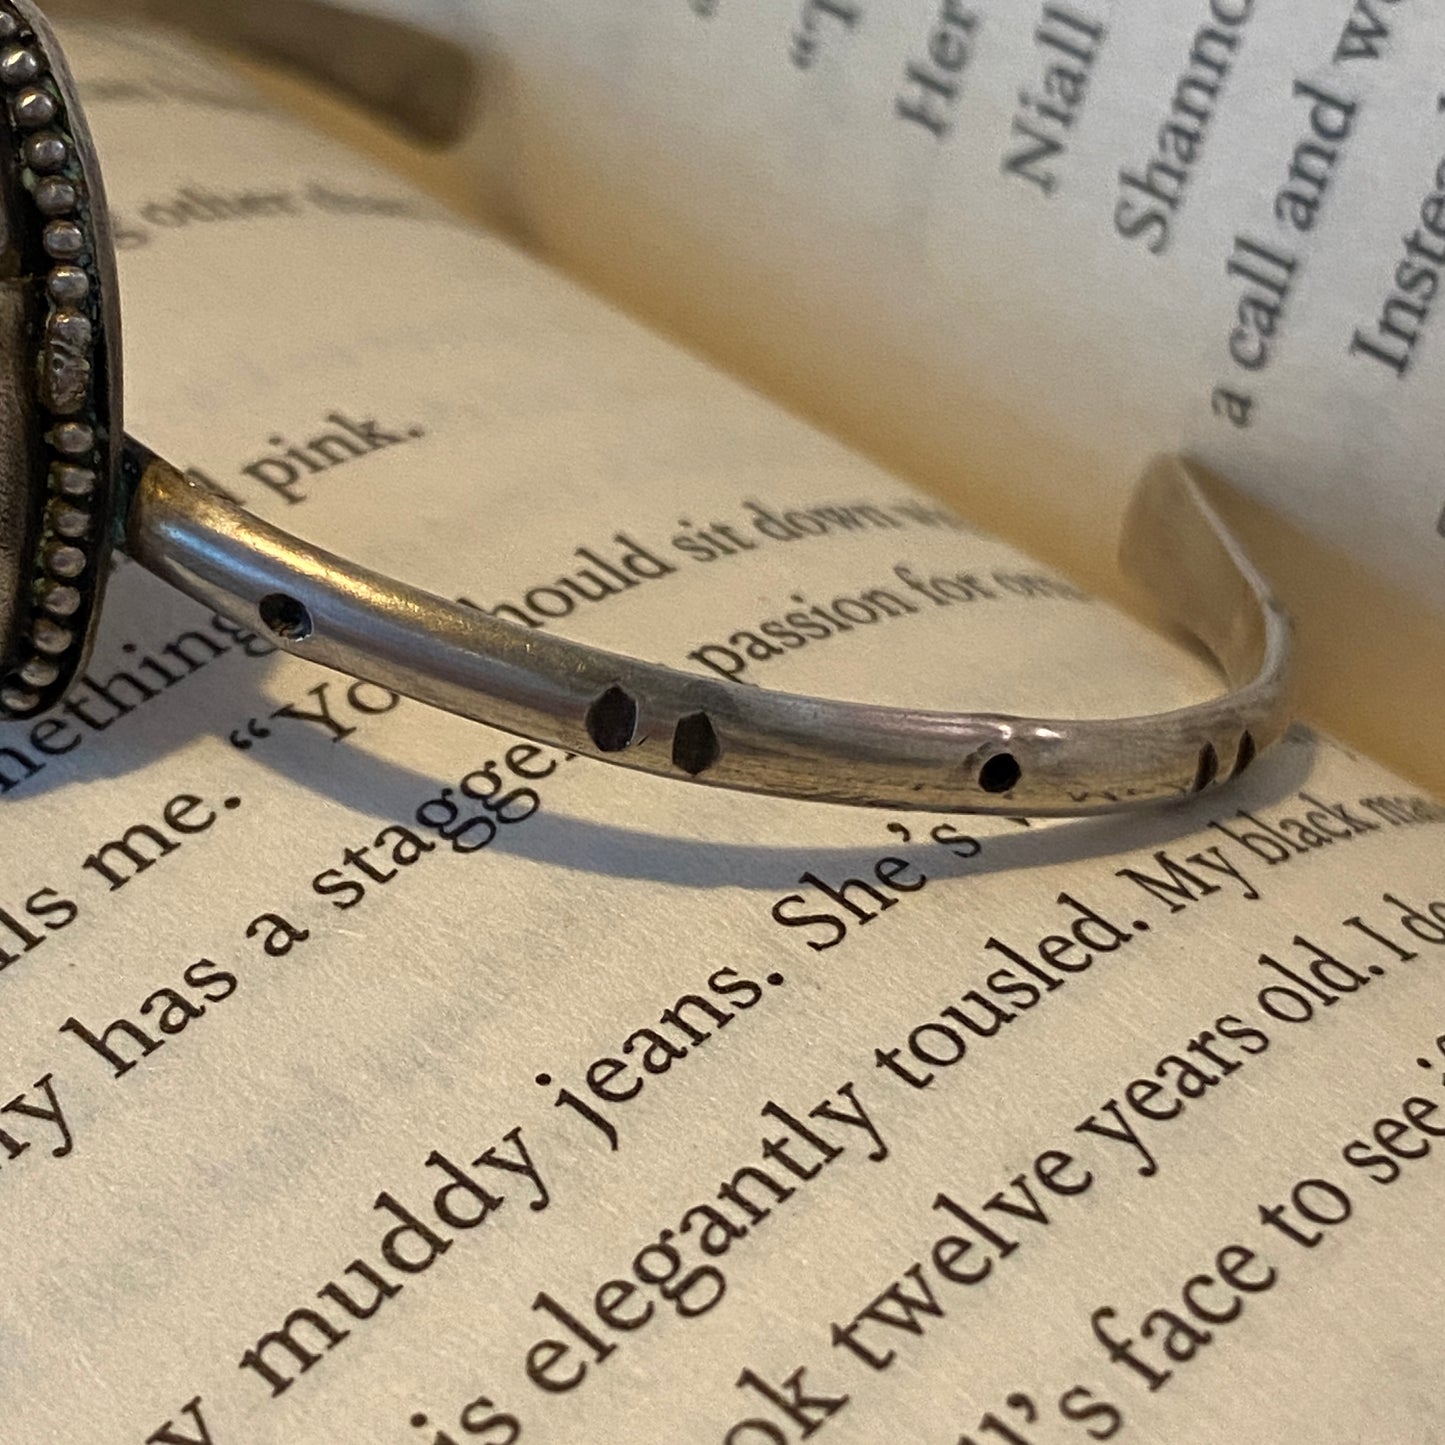 Larimer & Sterling Silver Cuff Bracelet- Adjustable, Handcrafted, Hand Stamped with Details